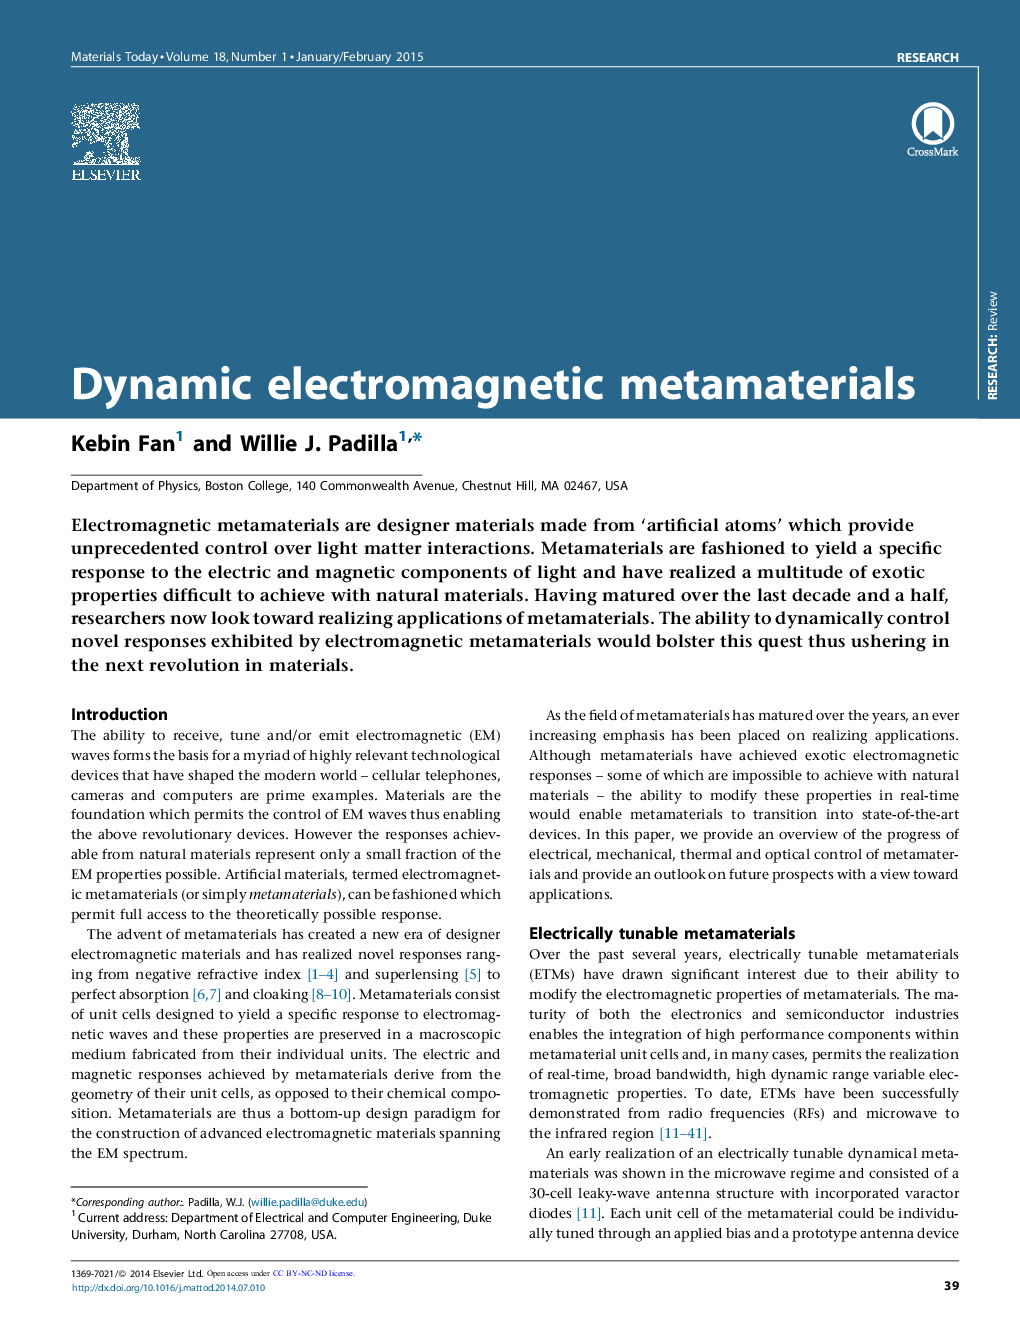 Dynamic electromagnetic metamaterials